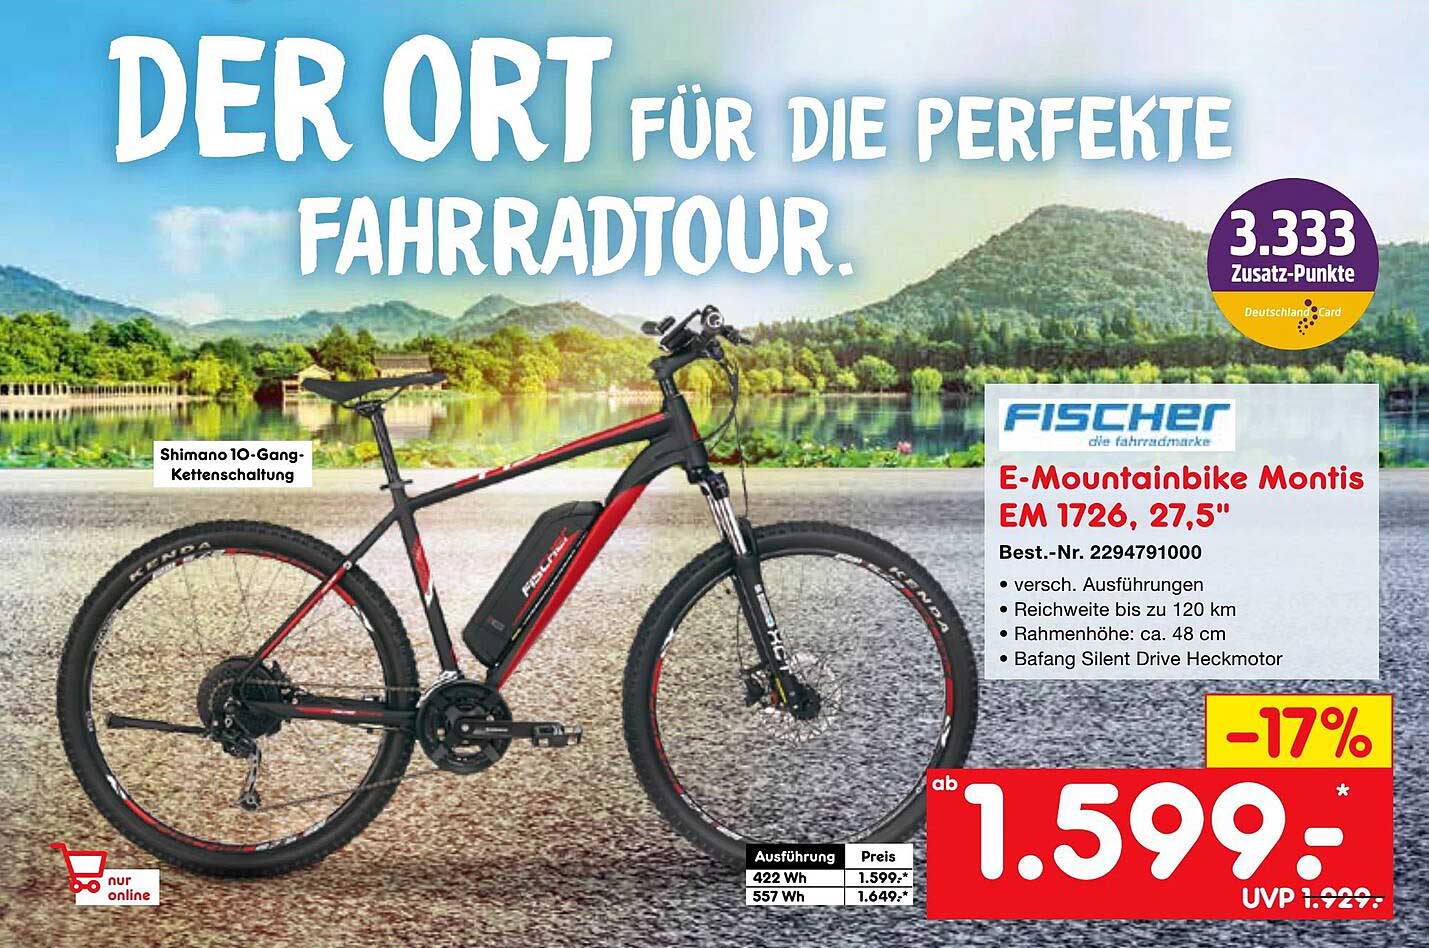 Netto Marken-Discount Fischer E-mountainbike Montis Em 1726, 27.5